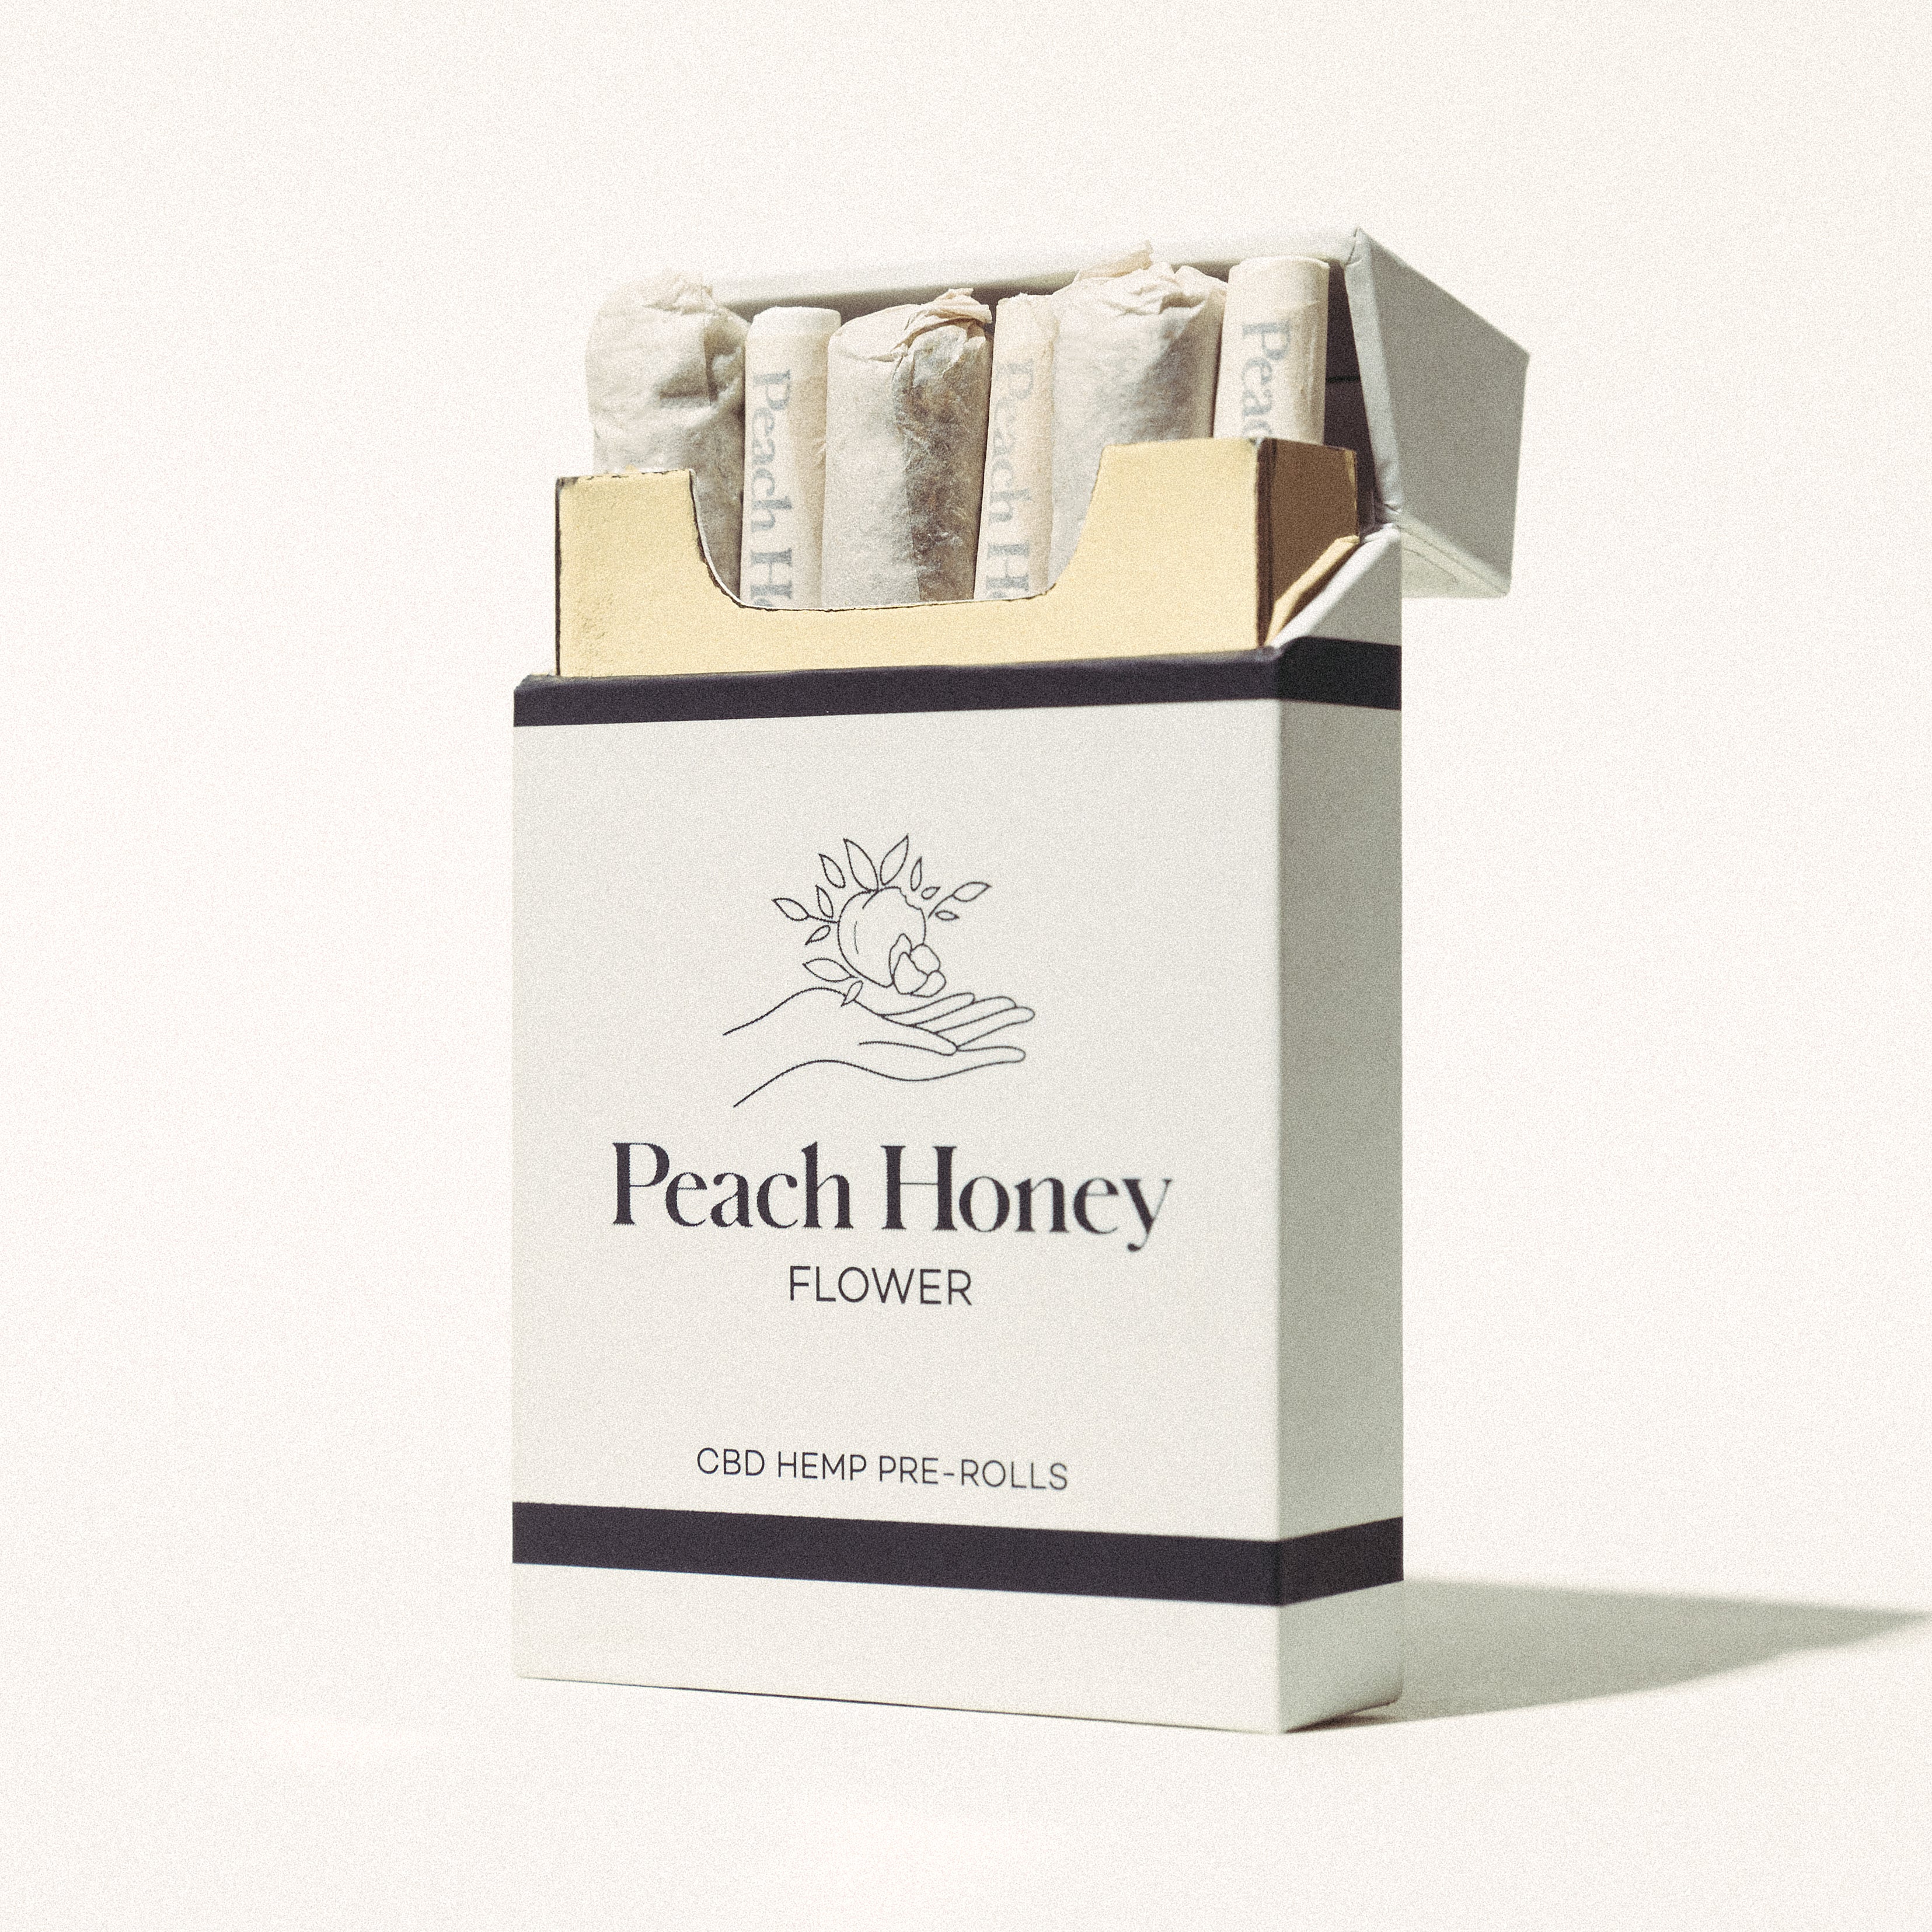 Peach Honey  CBD Hemp Pre-Roll Joints.